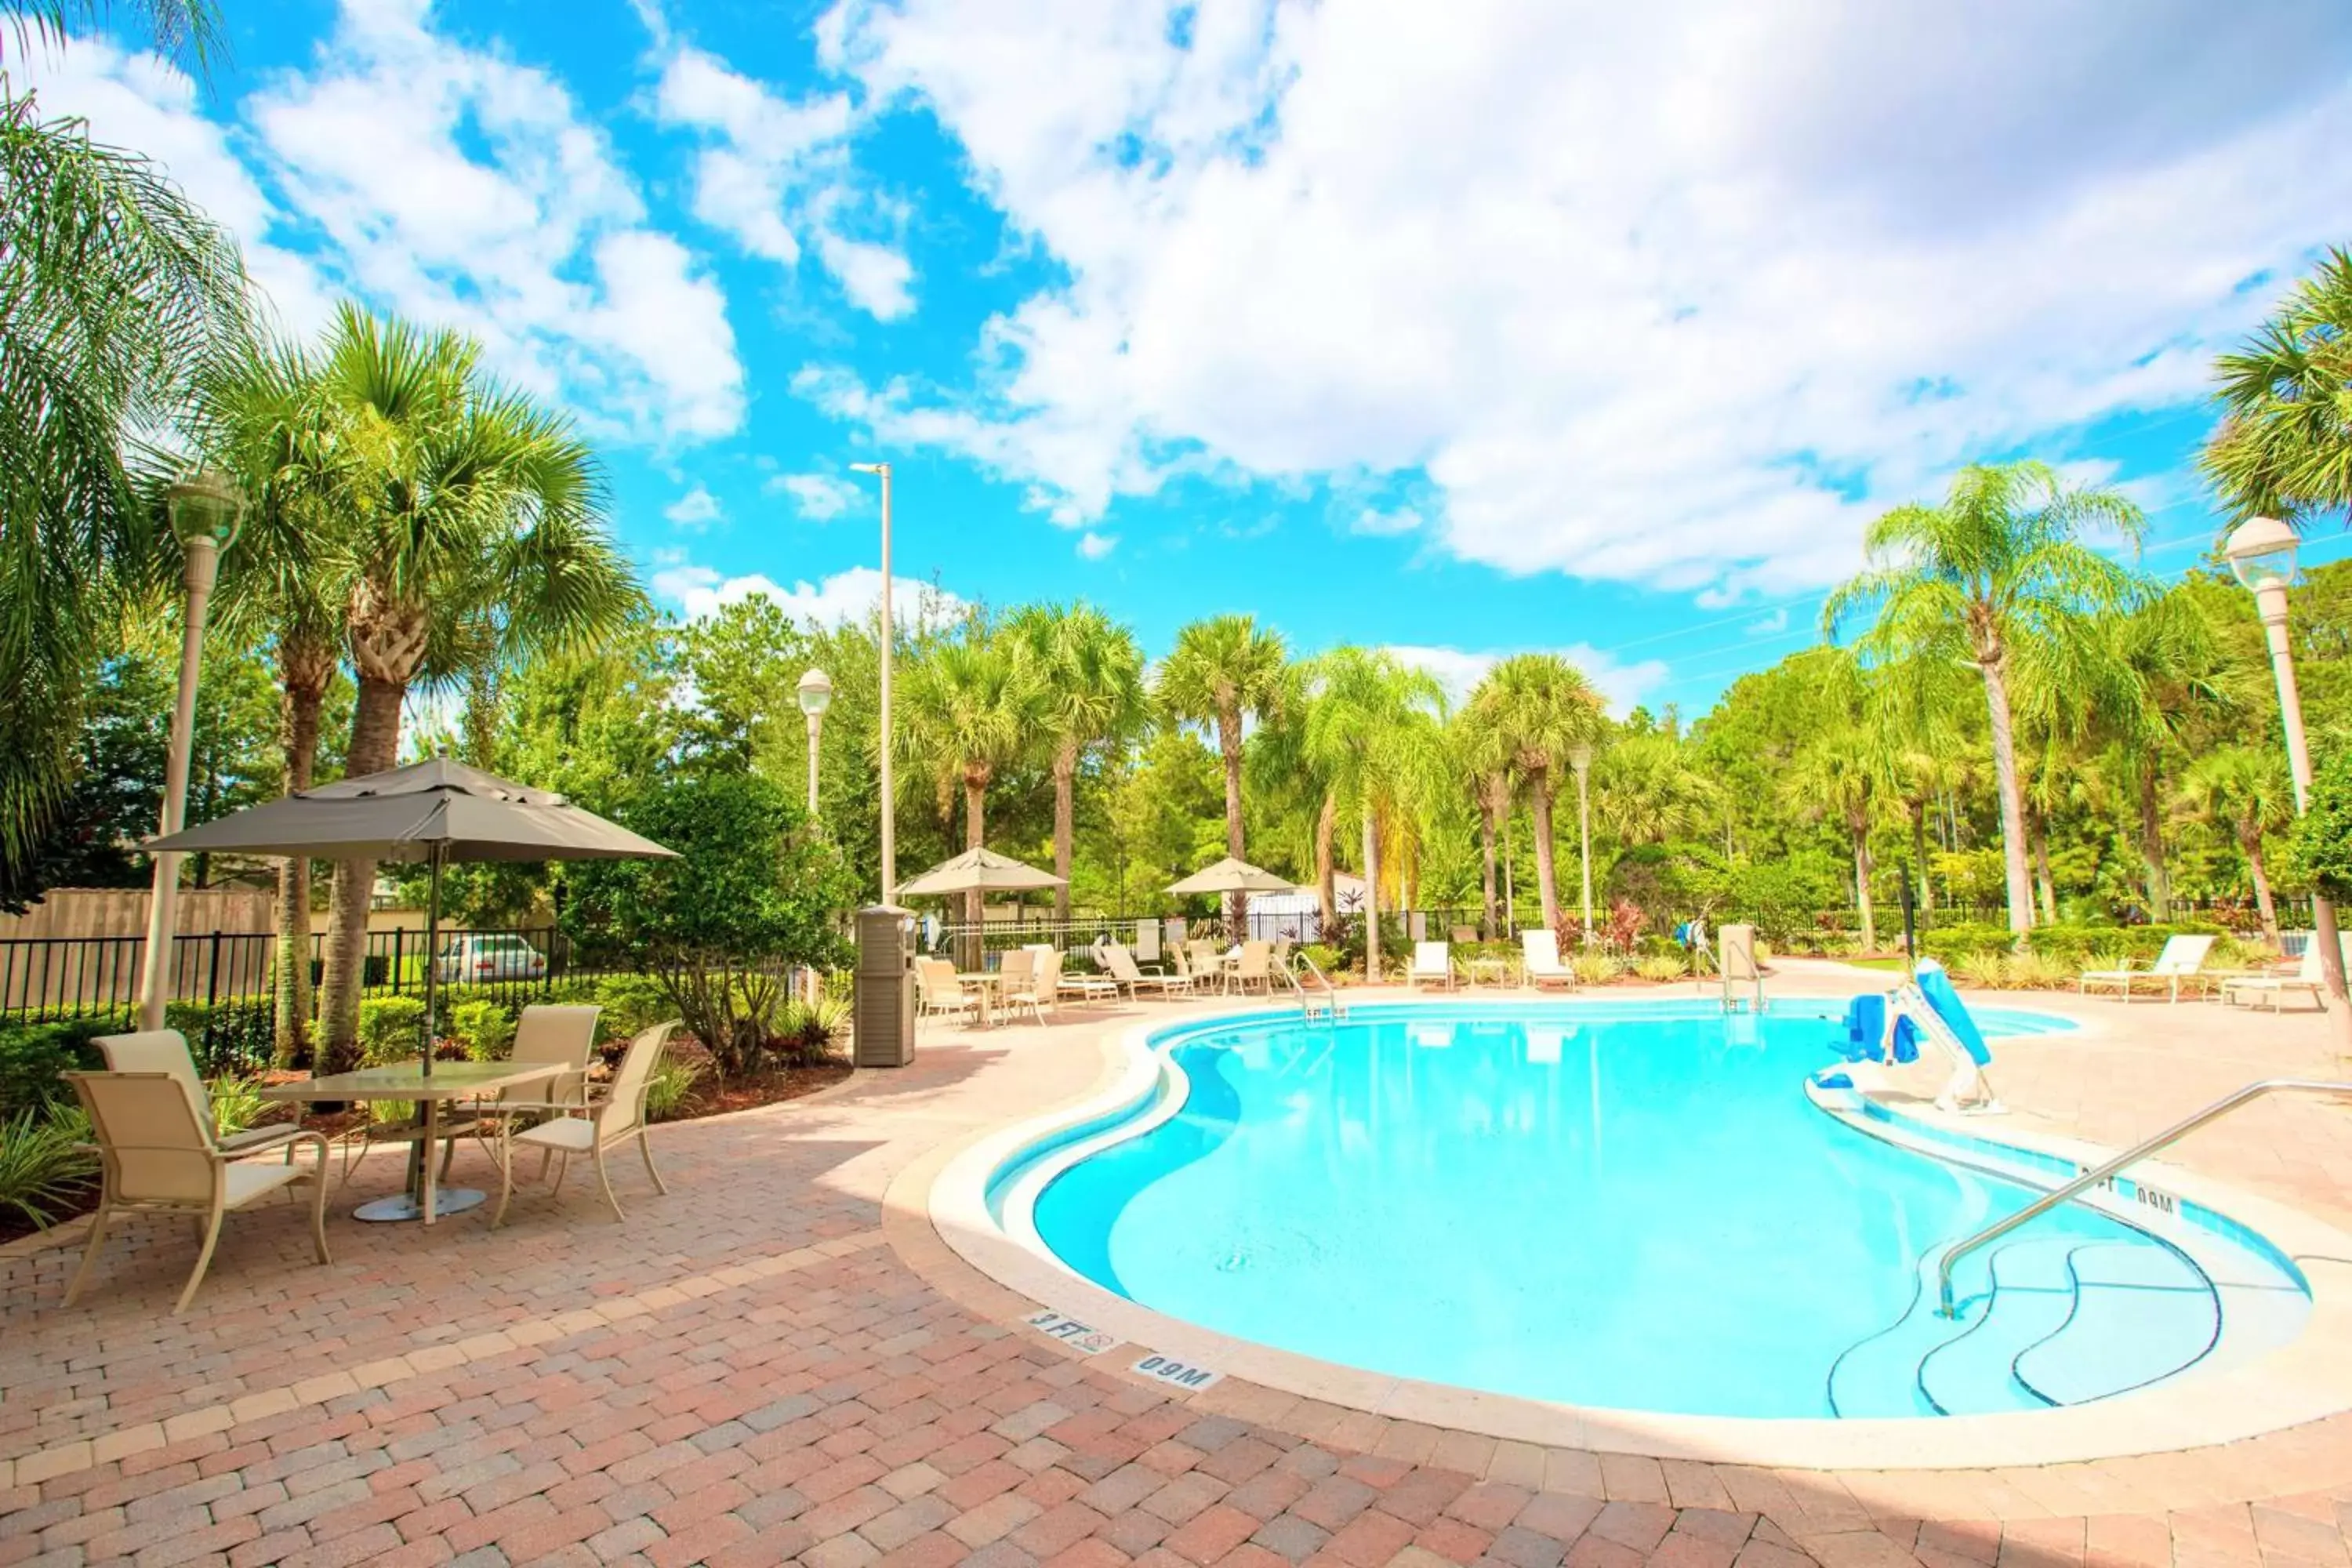 On site, Swimming Pool in Best Western Plus Kissimmee-Lake Buena Vista South Inn & Suites